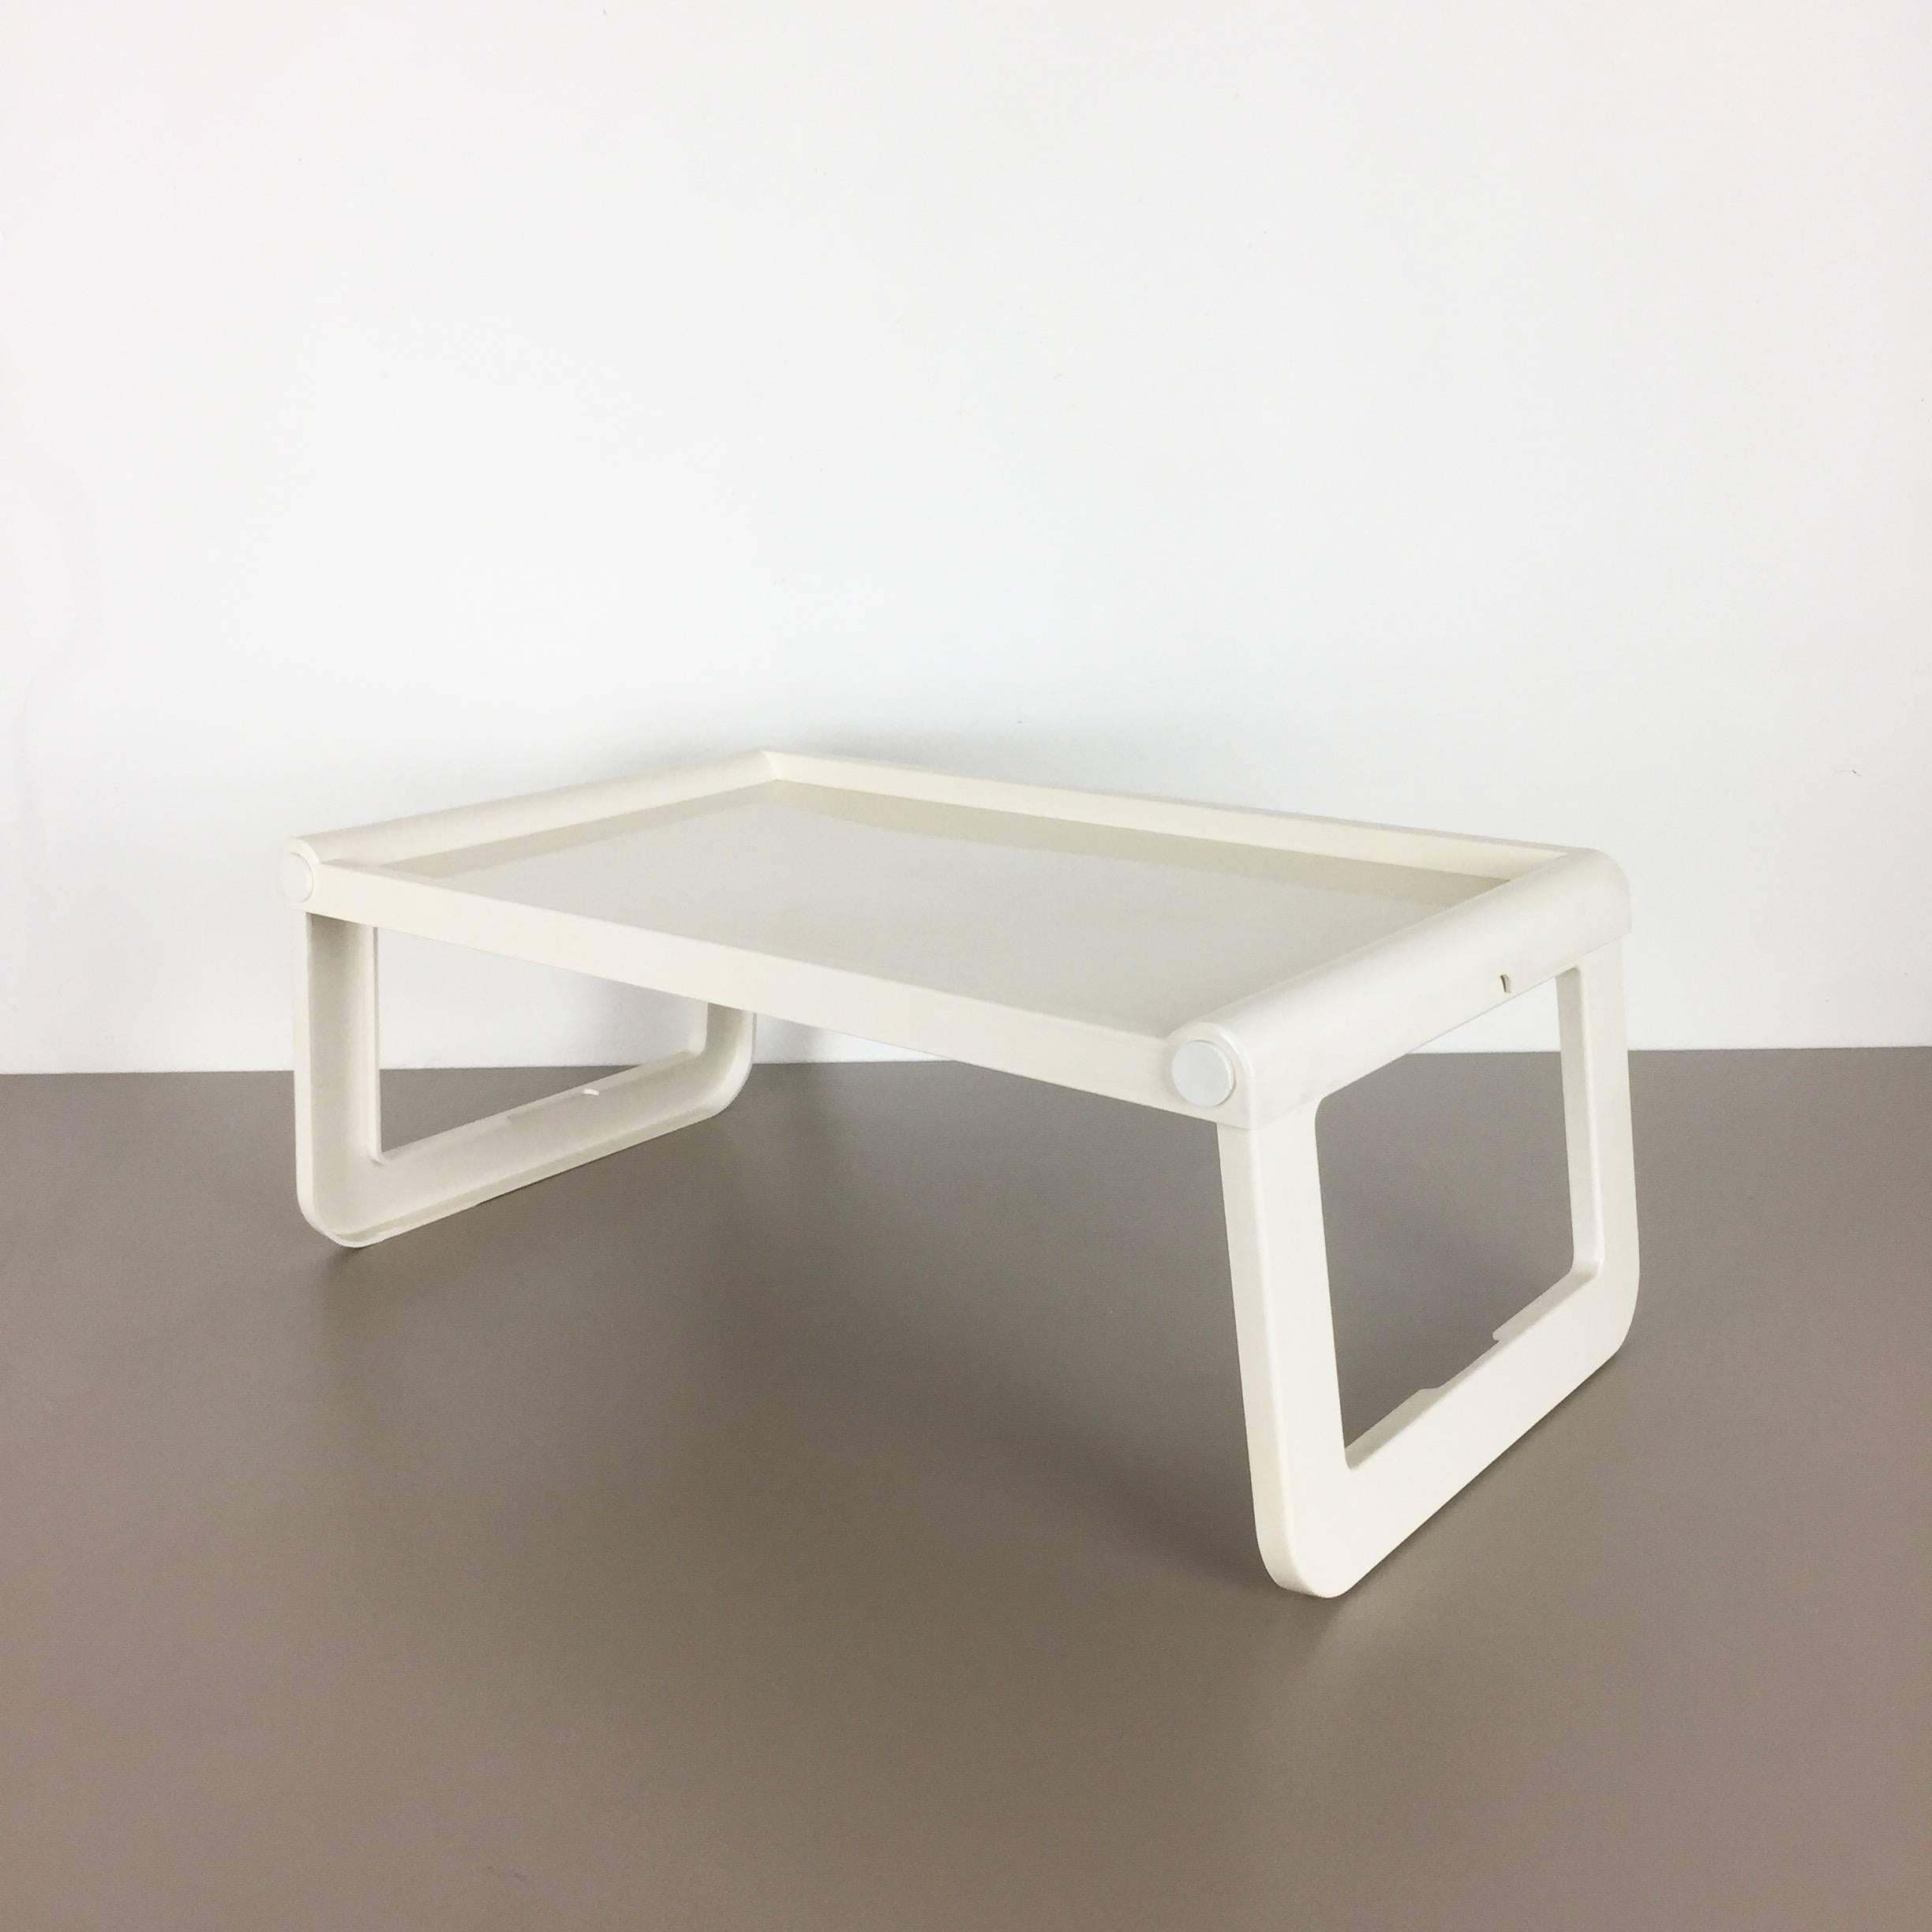 Luigi Massoni Minimalist Plastic White Bed Tray Element by Guzzini, Italy, 1980s For Sale 4